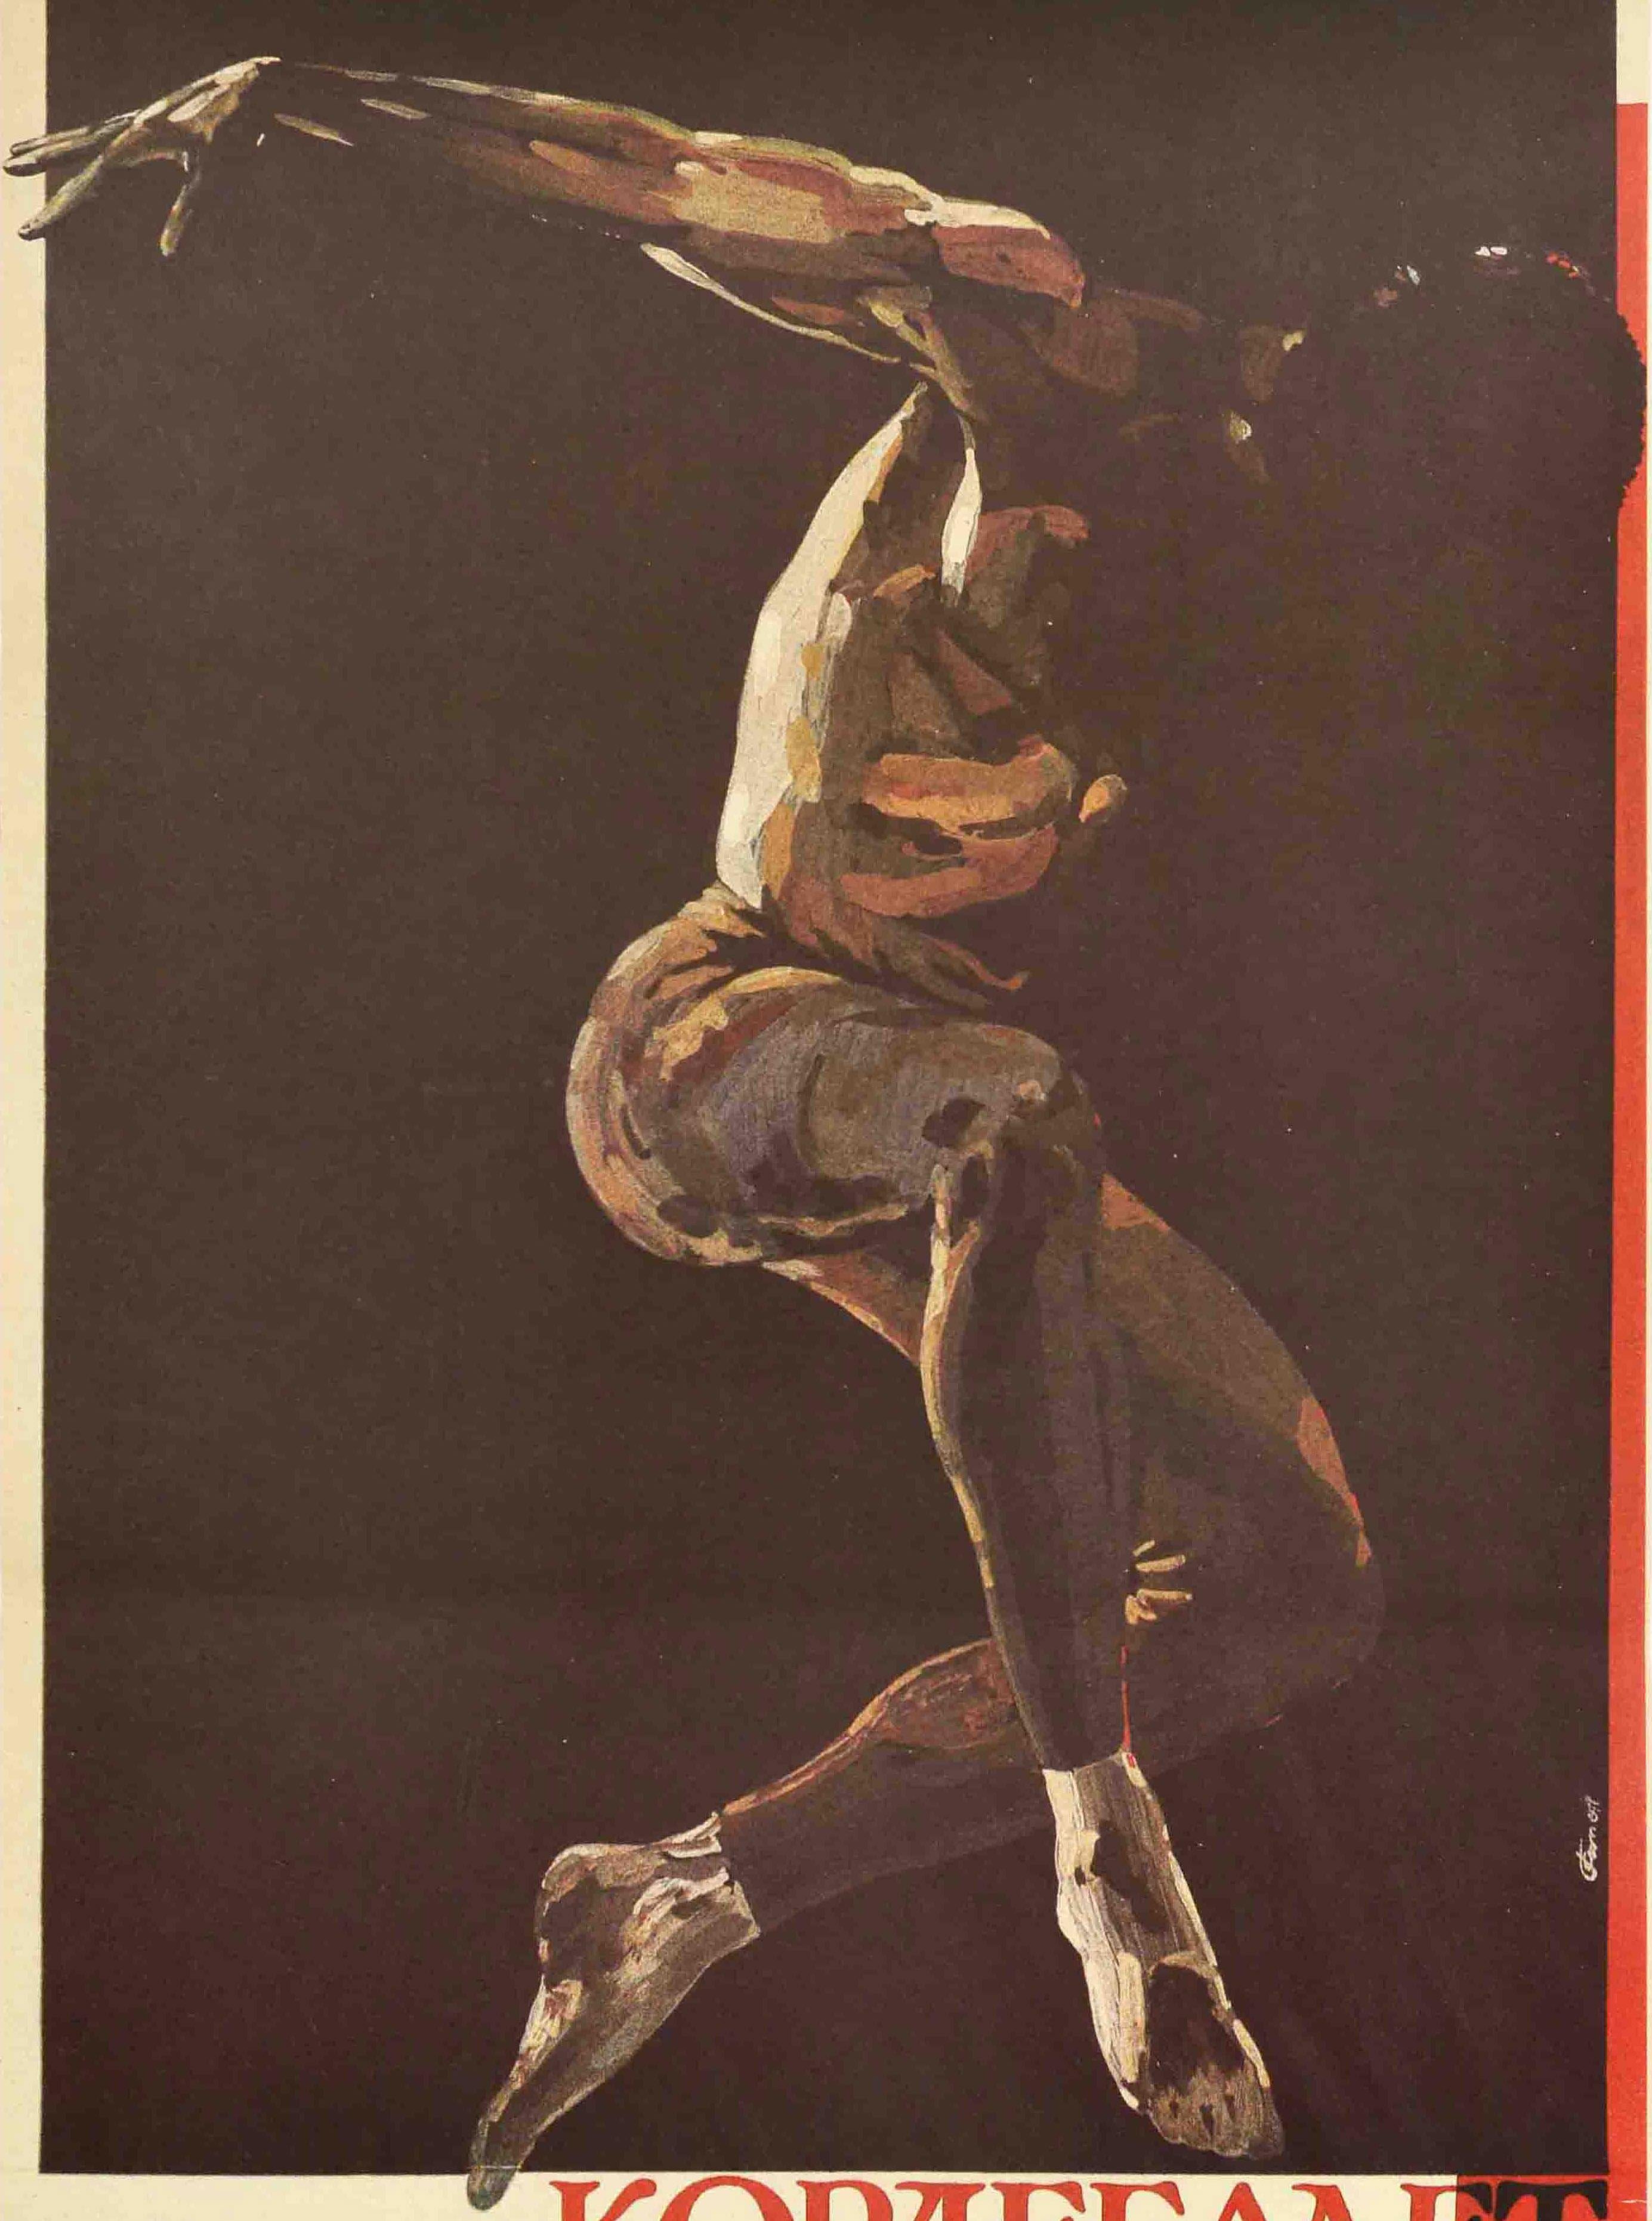 Original Vintage Movie Poster Chorus Line Broadway Musical Dance Michael Douglas - Print by Unknown